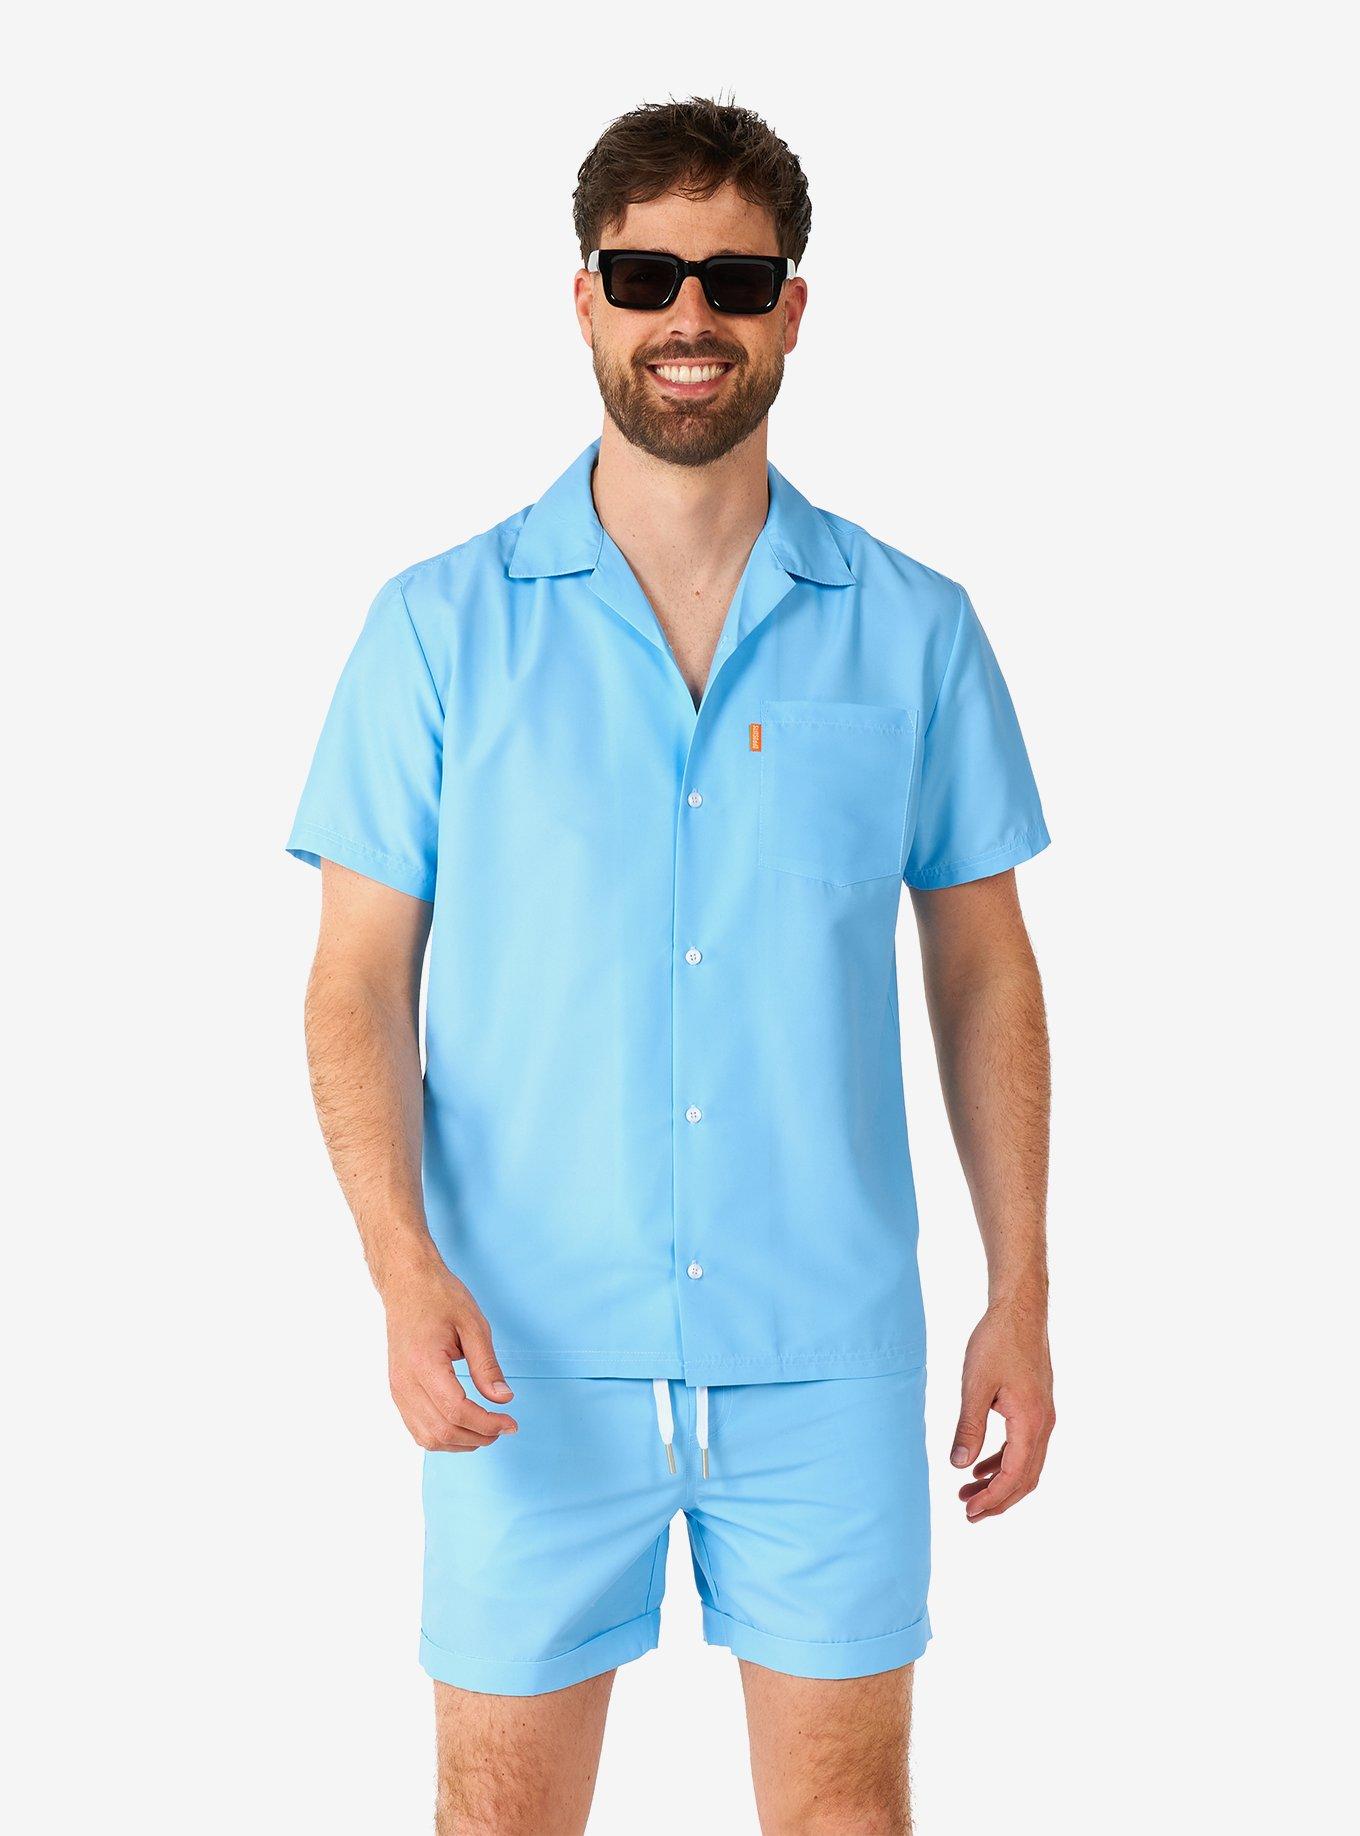 Cool Blue Summer Button-Up Shirt and Short, BLUE, hi-res